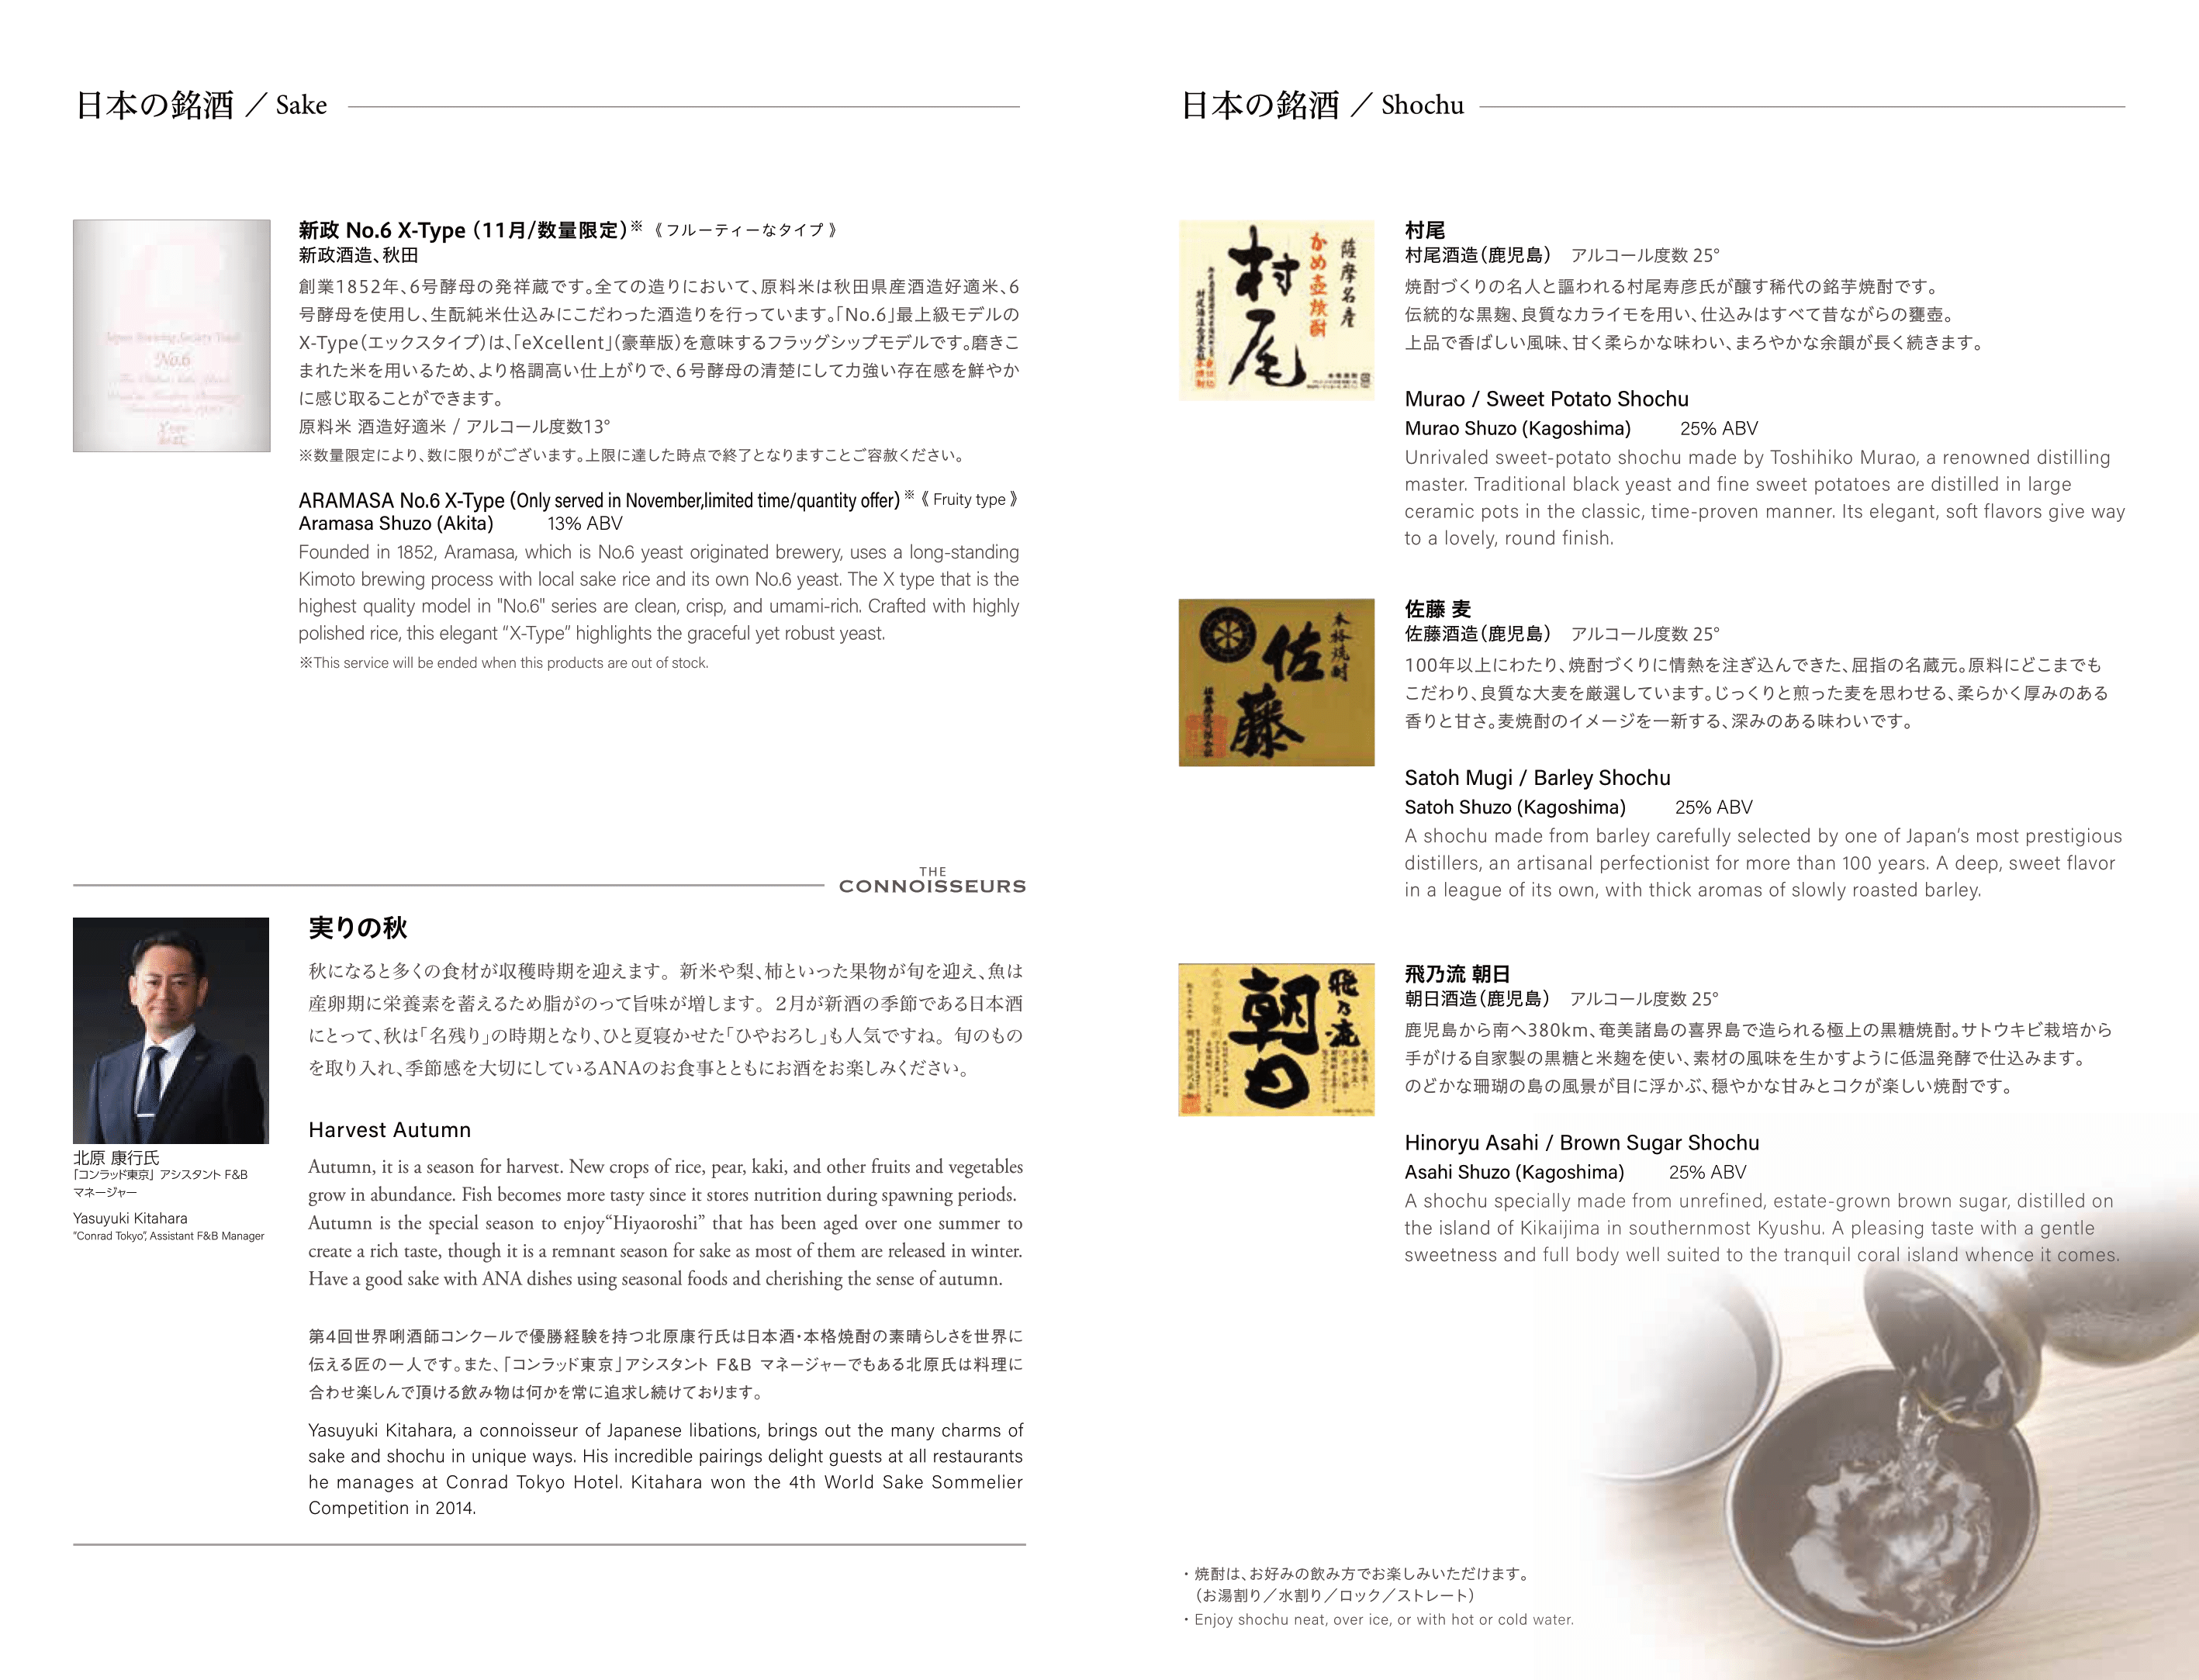 Second page of ANA beverage menu showing sake and shochu.